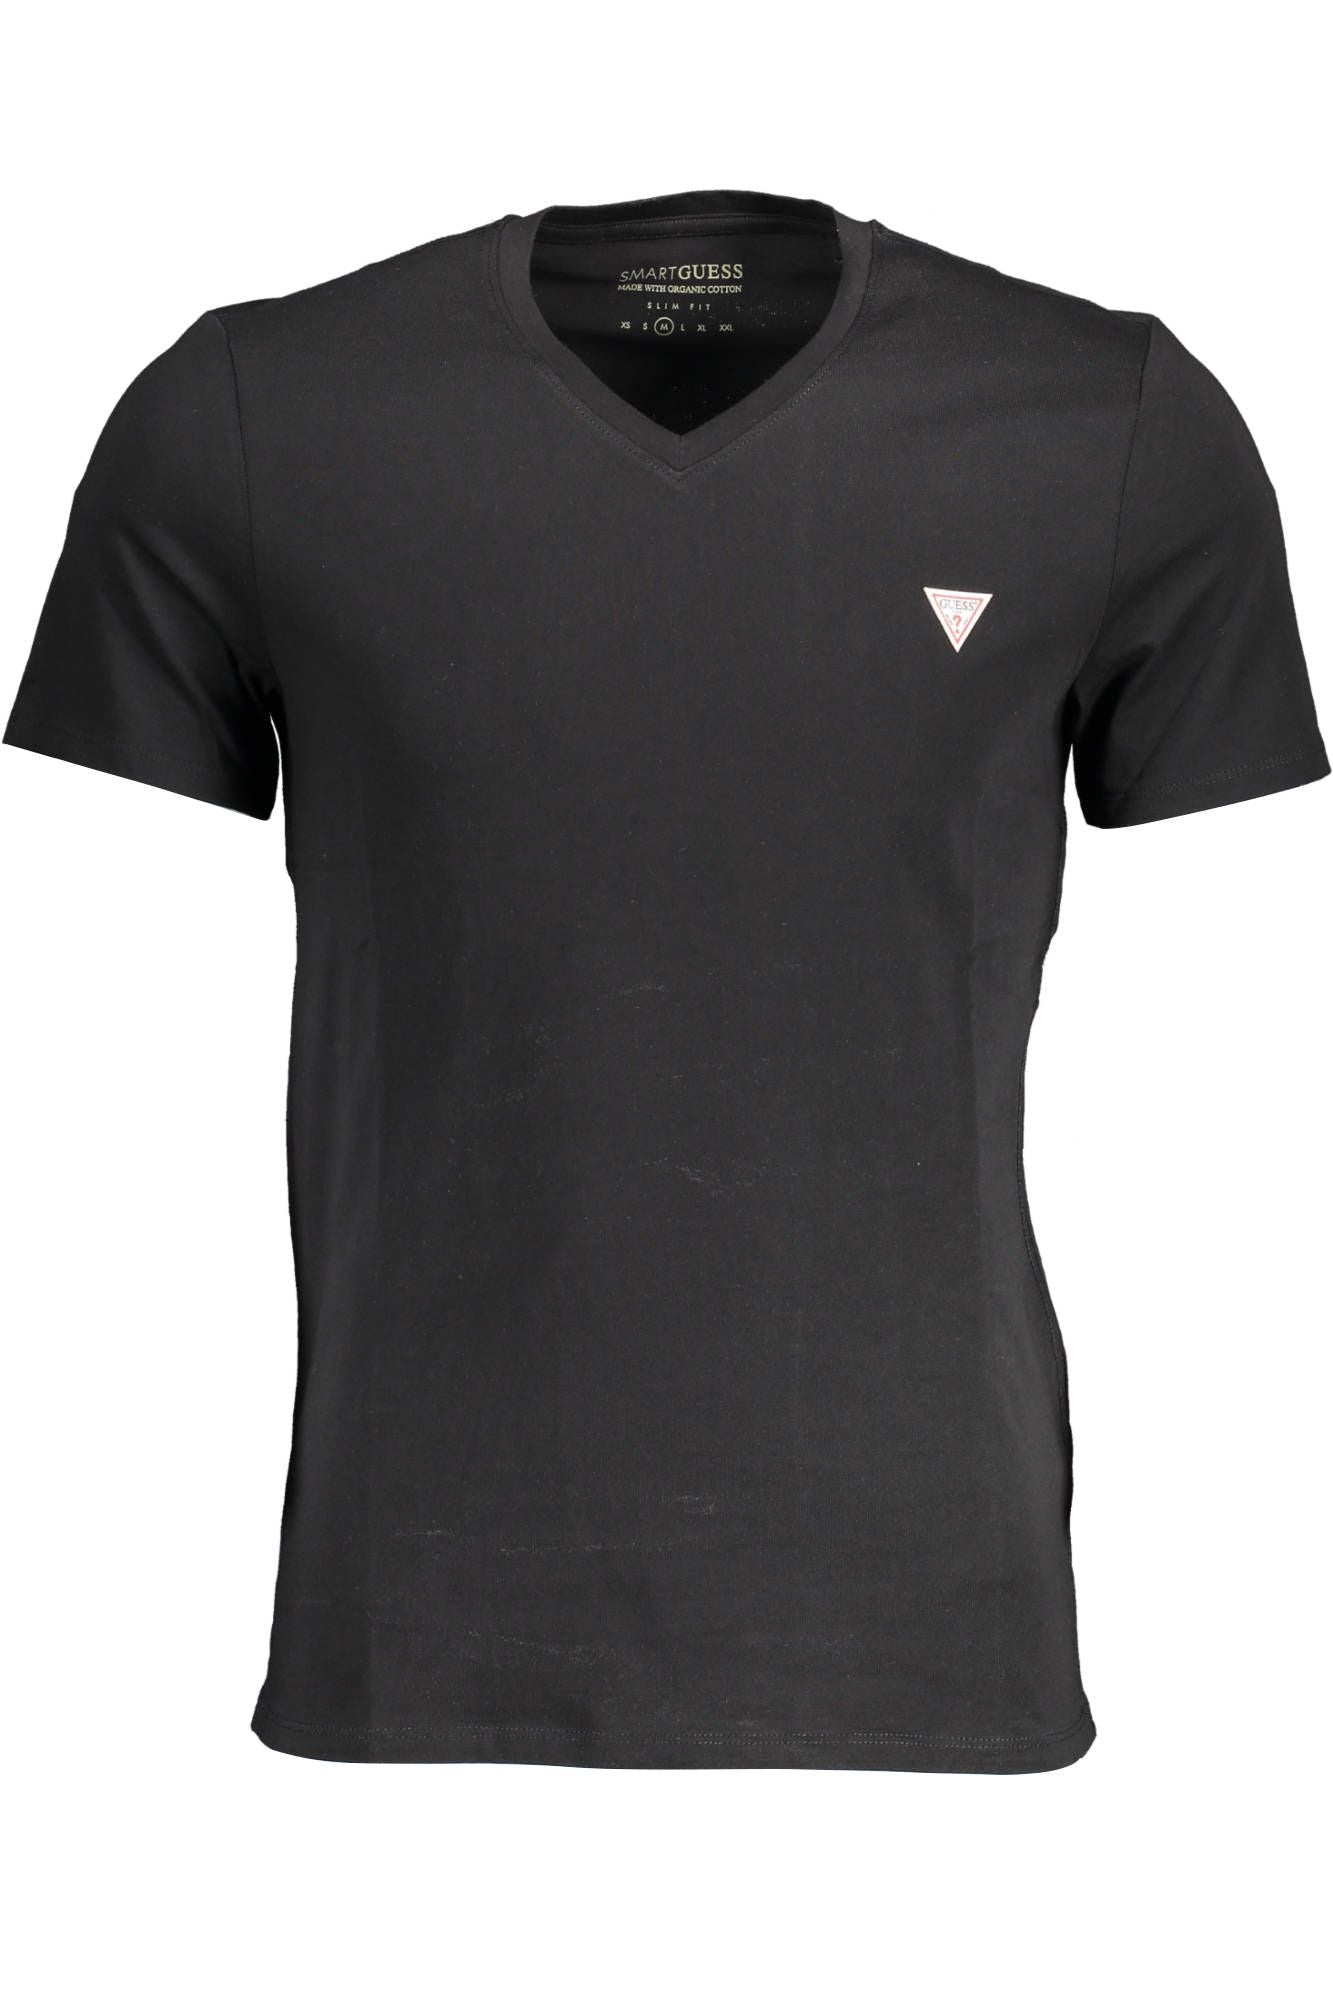 Sleek V-Neck Logo Tee in Classic Black